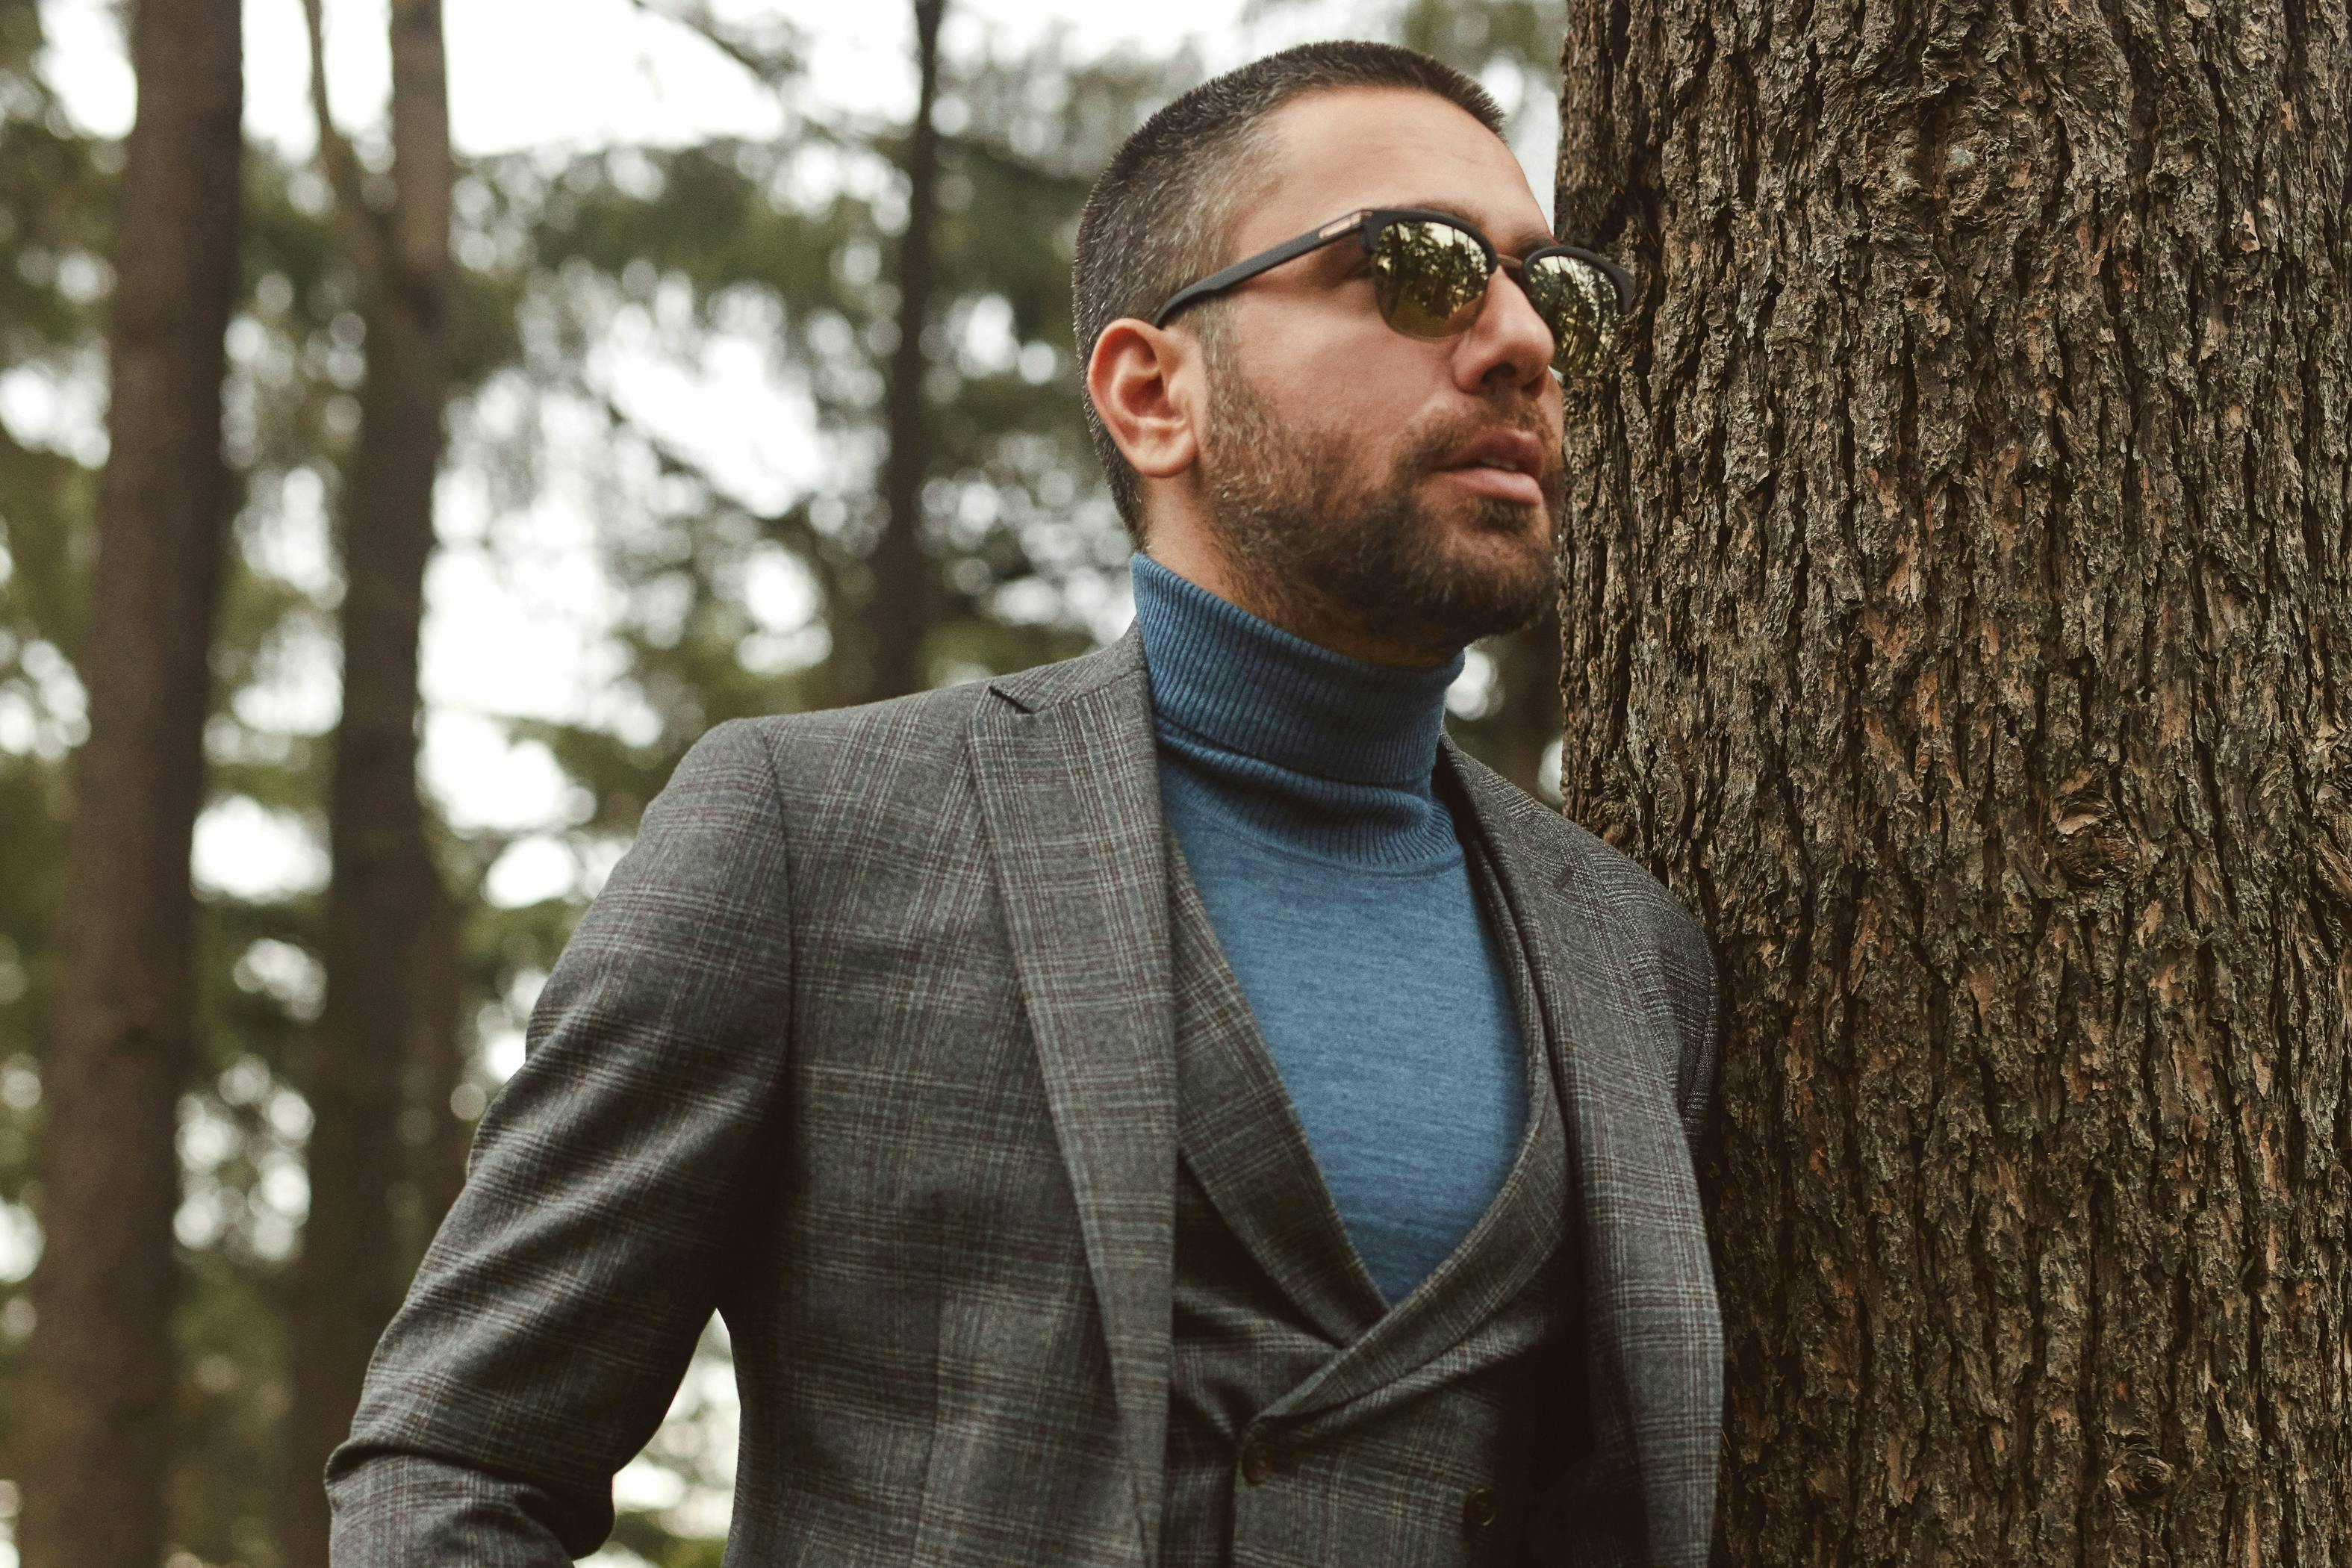 clothing person suit overcoat coat sunglasses accessories man tree plant